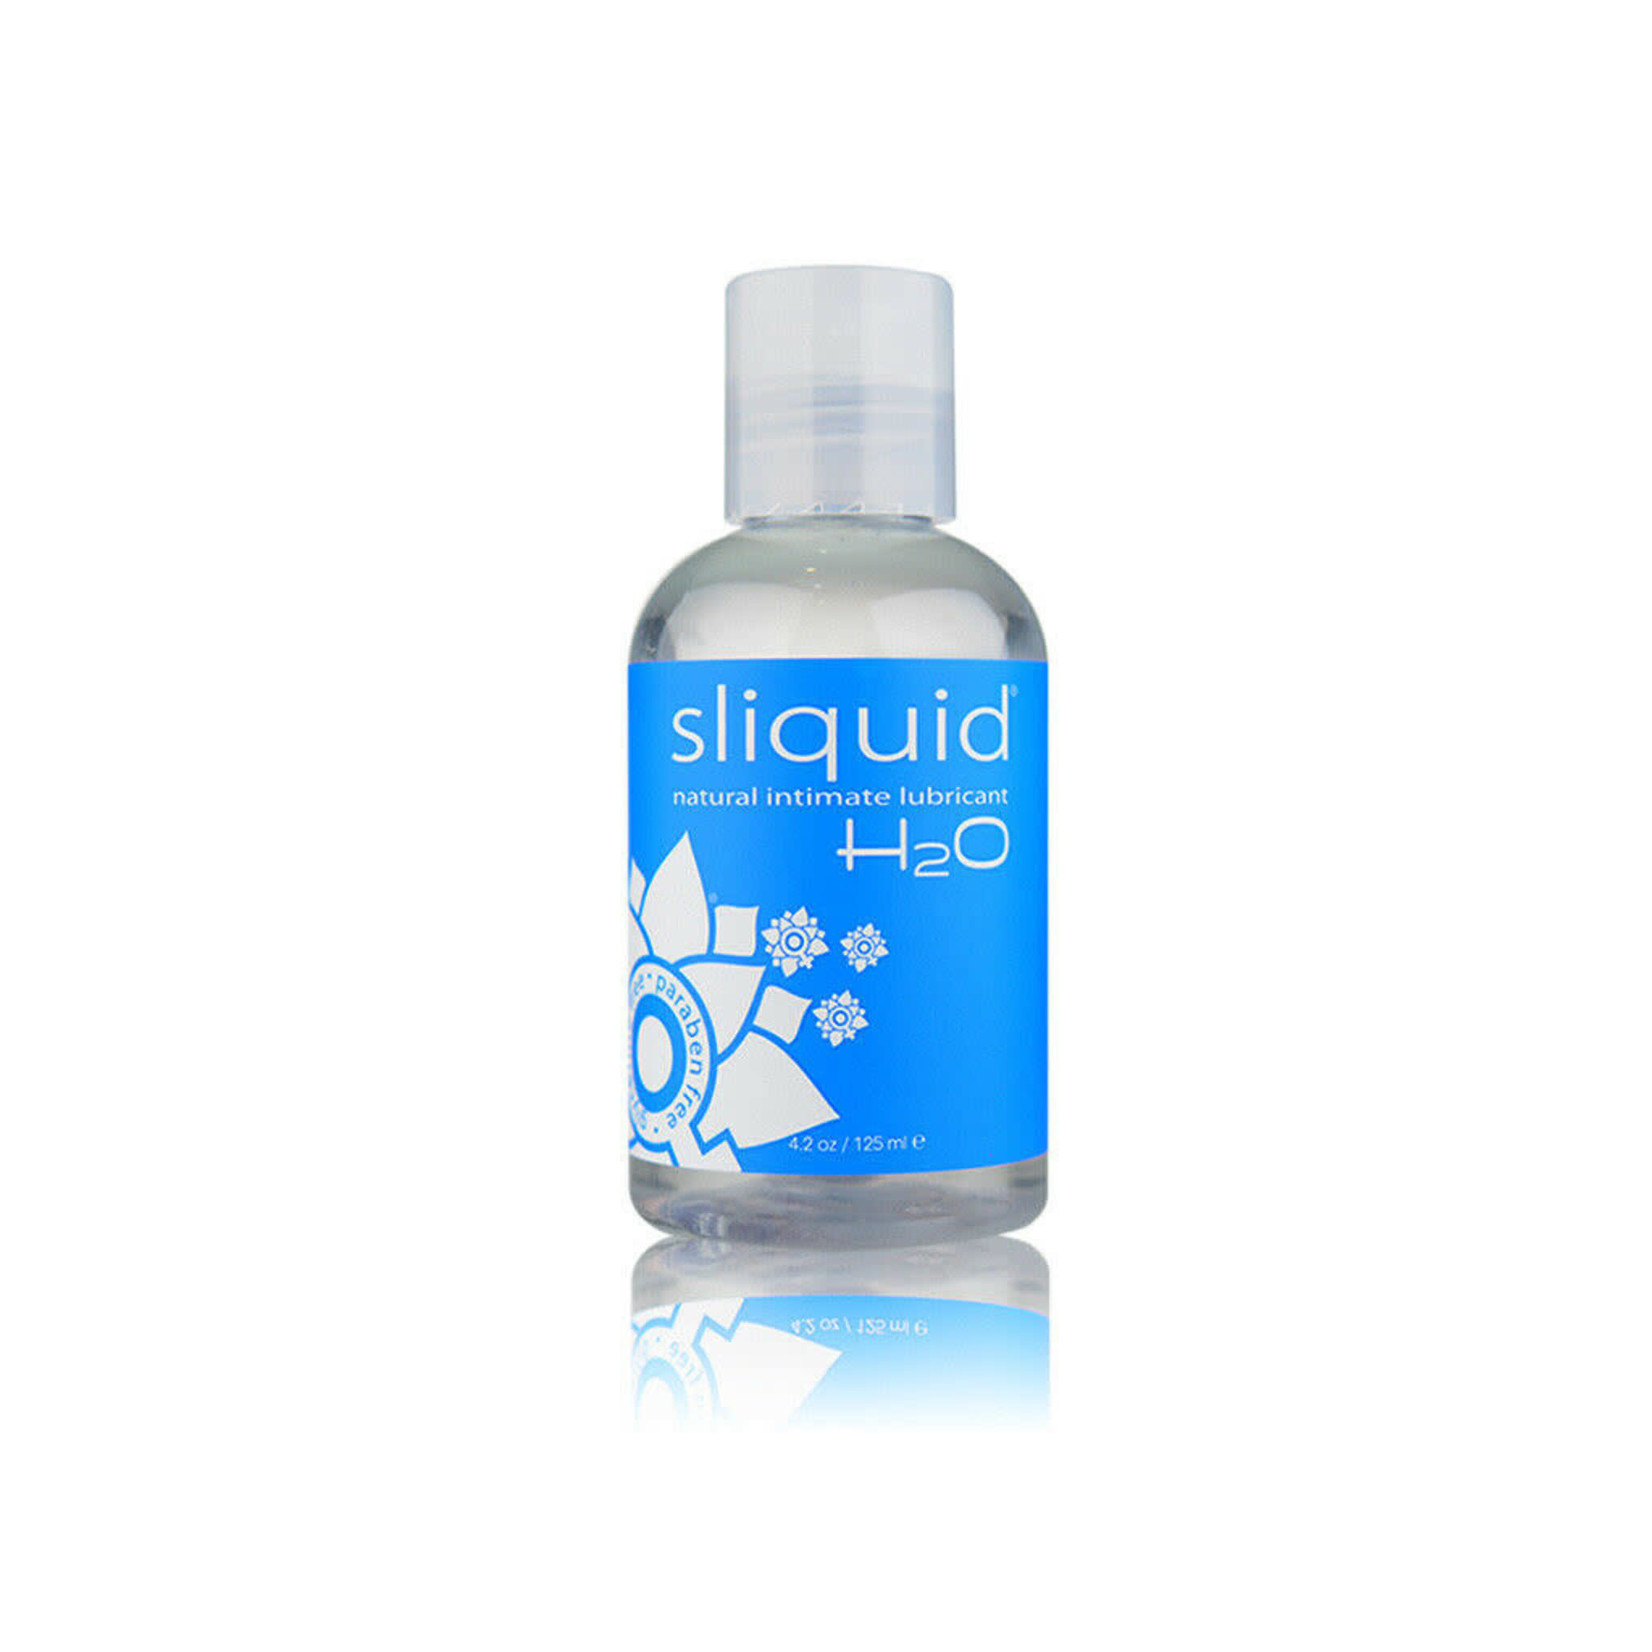 SLIQUID SLIQUID - H2O GLYCERINE FREE NATURAL LUBE 4.2OZ/125ML